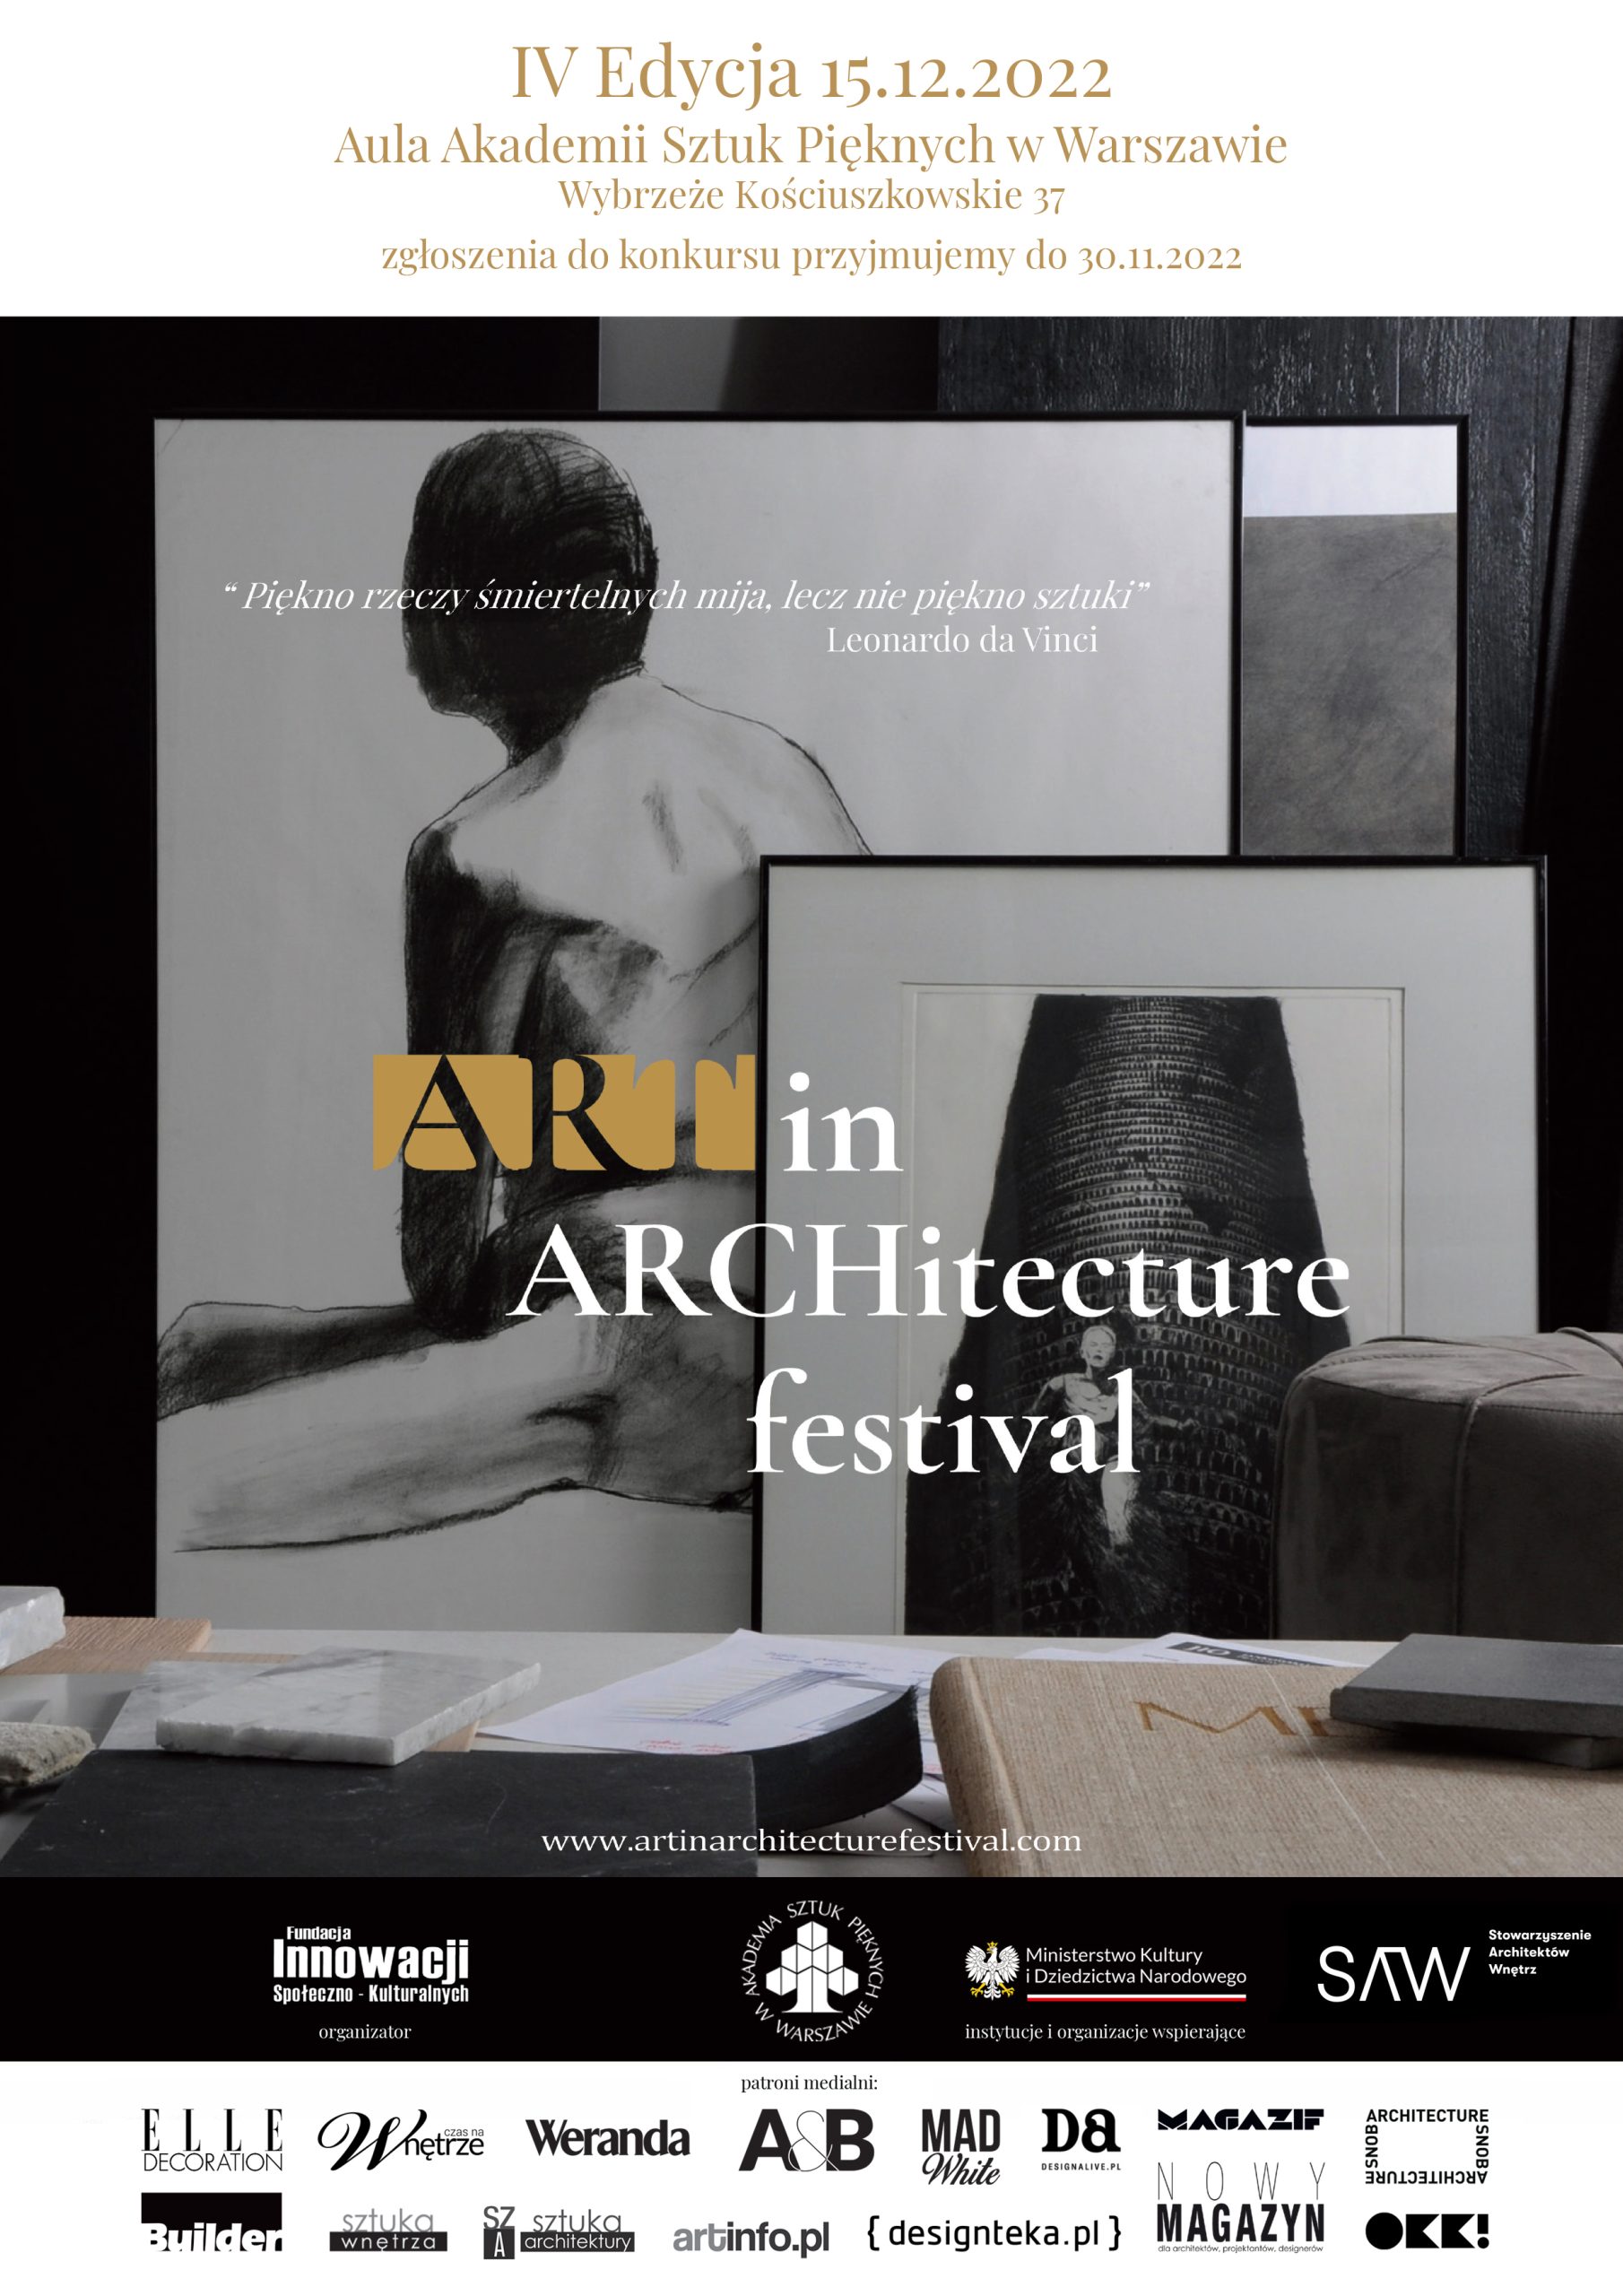 V edycja Art in Architecture festival